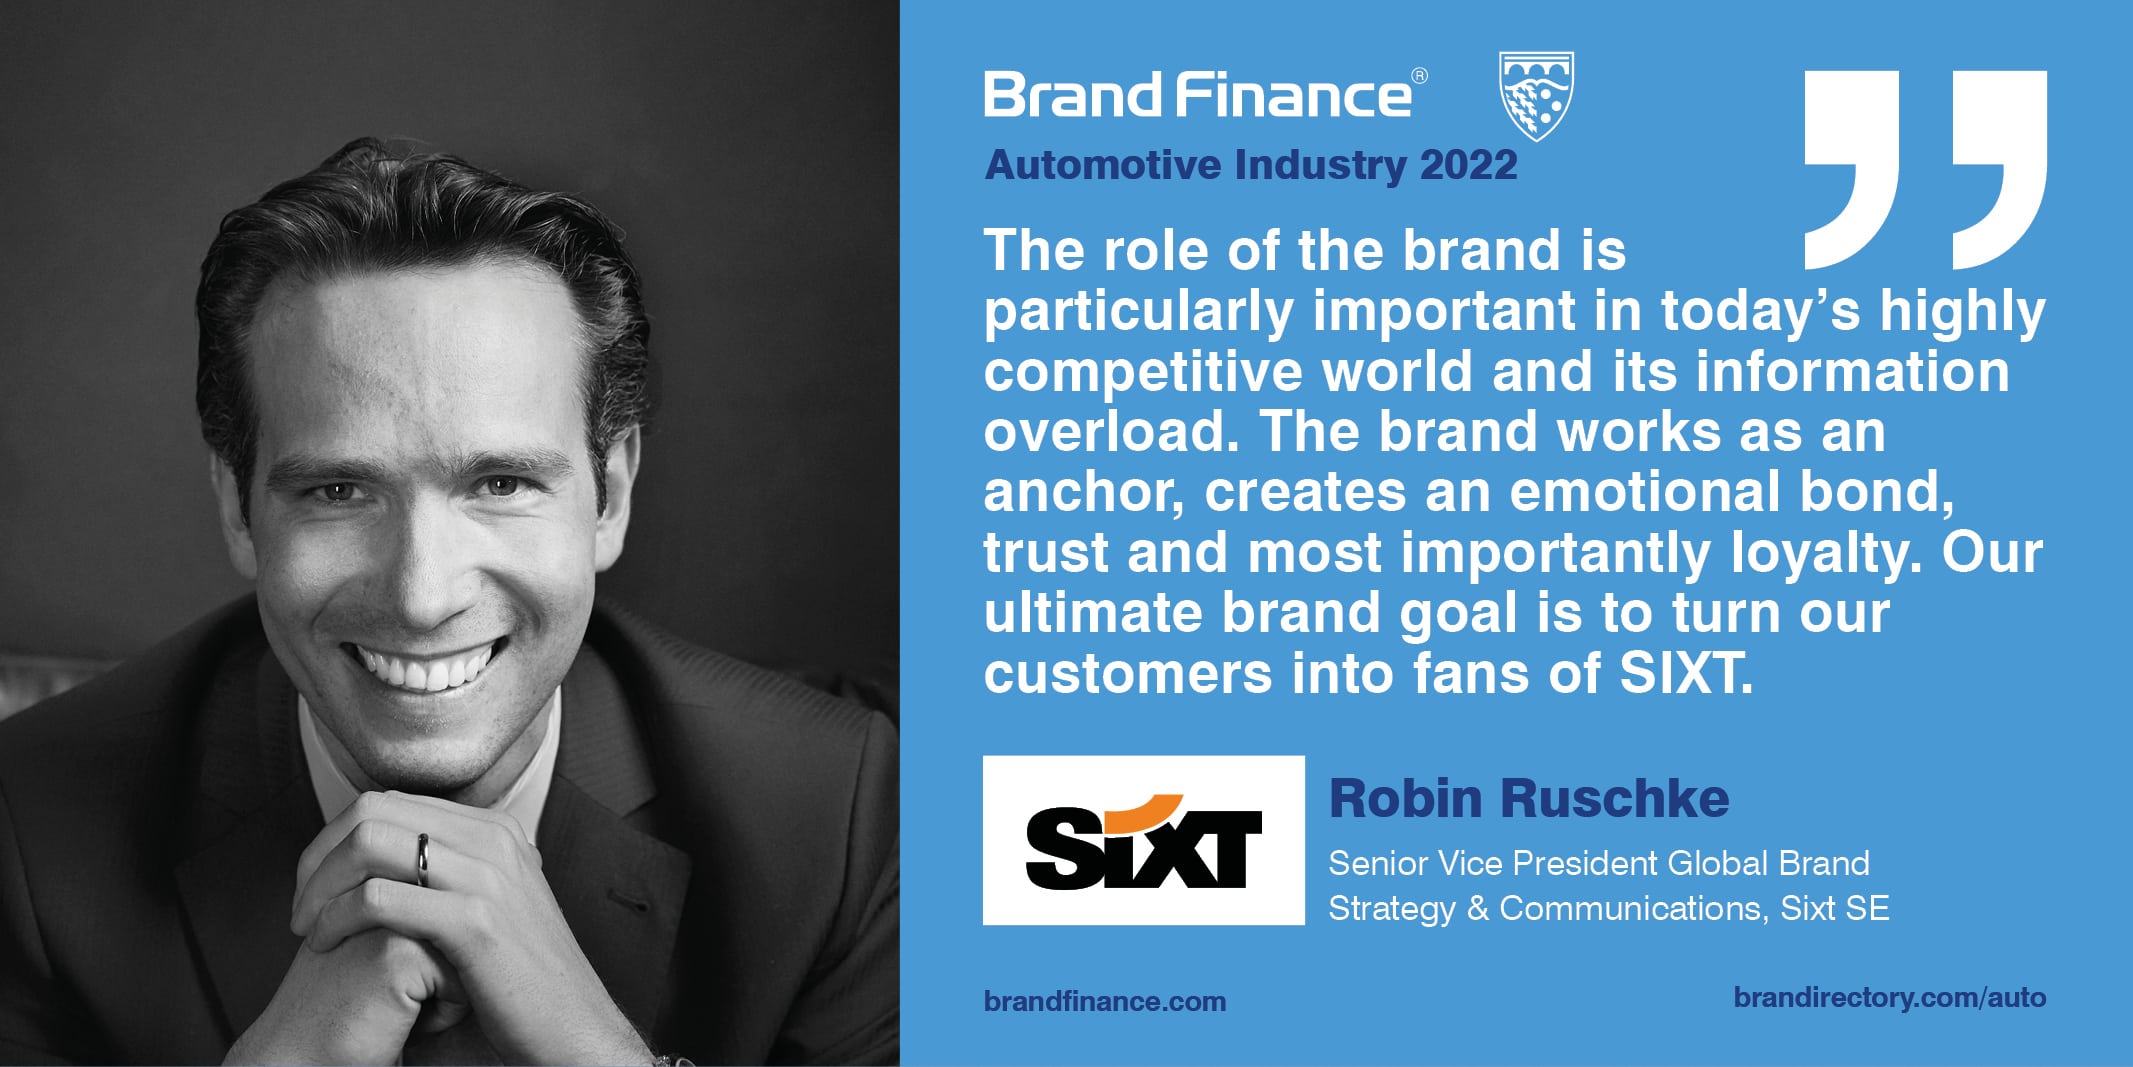 Robin Ruschke, Senior Vice President Global Brand Strategy & Communications, SIXT